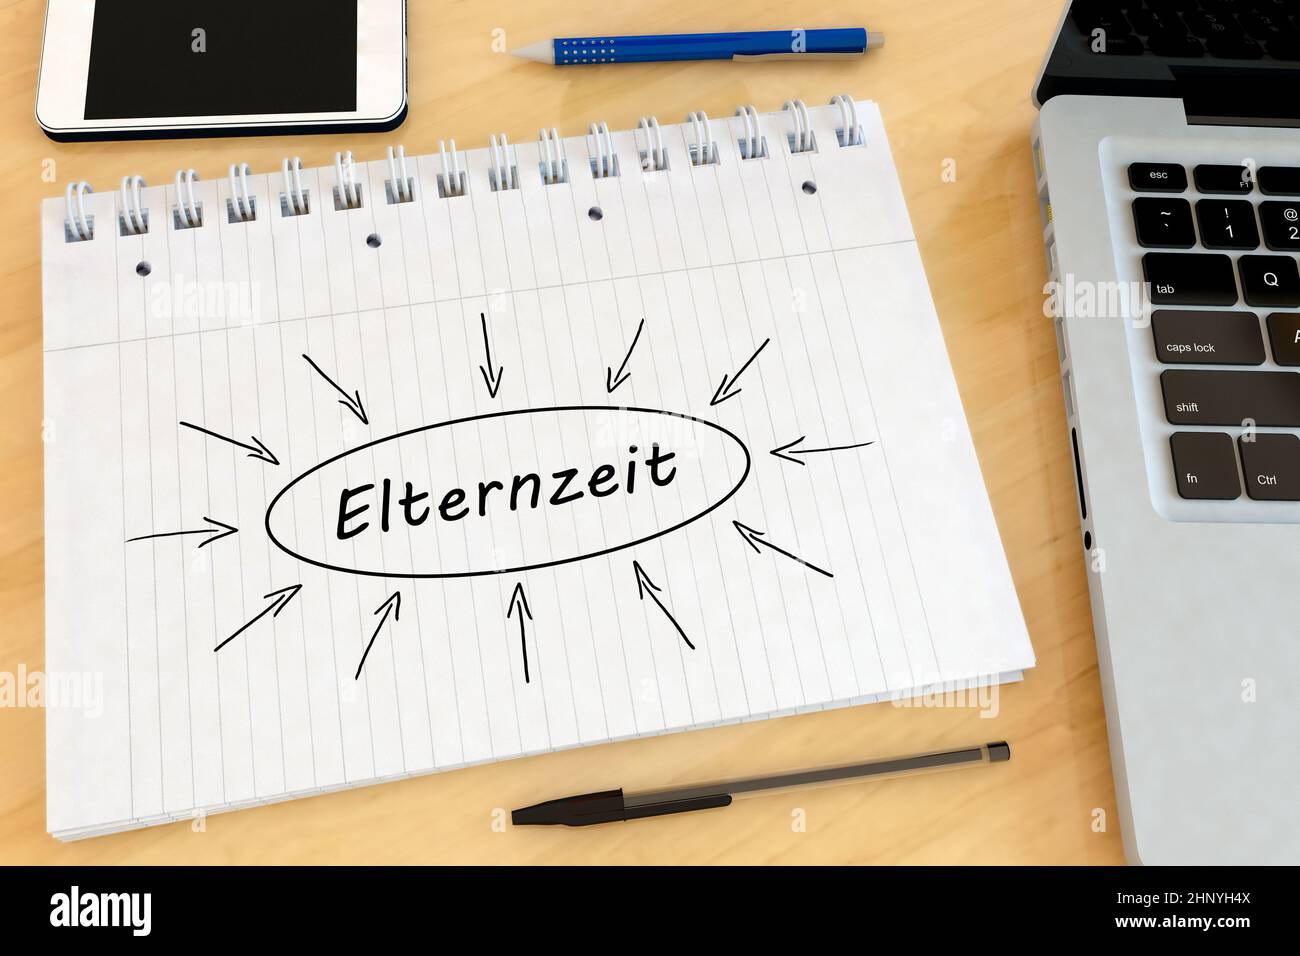 Elternzeit - german word for parental leave - handwritten text in a notebook on a desk - 3d render illustration. Stock Photo